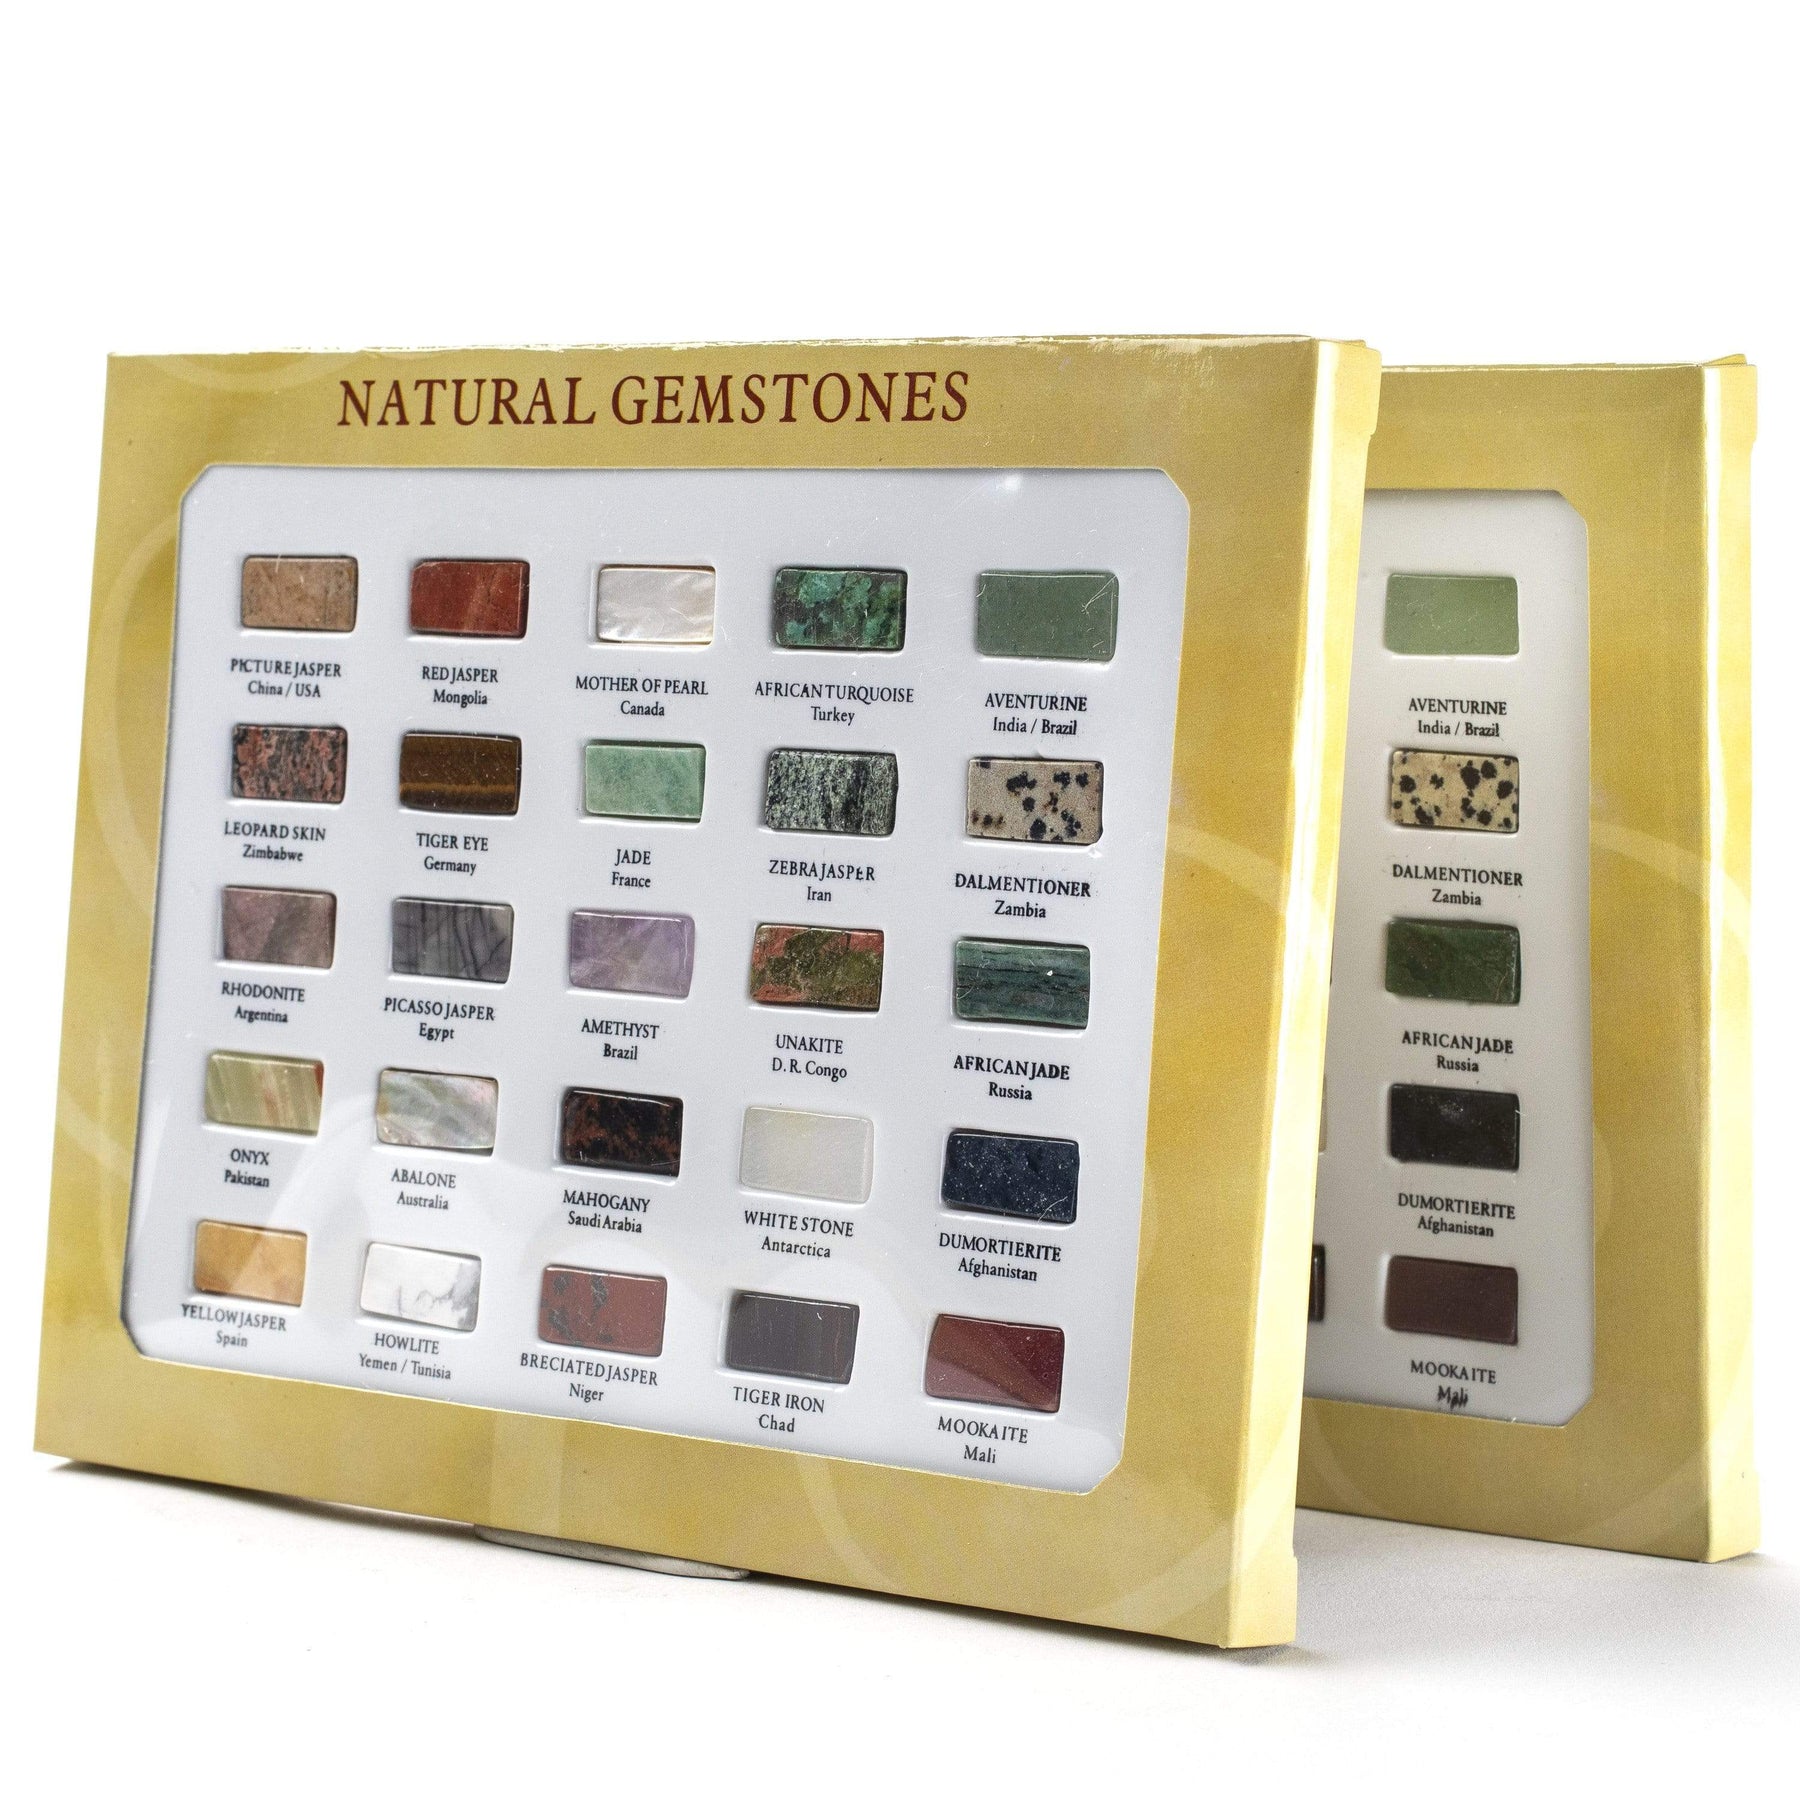 natural gemstone chart